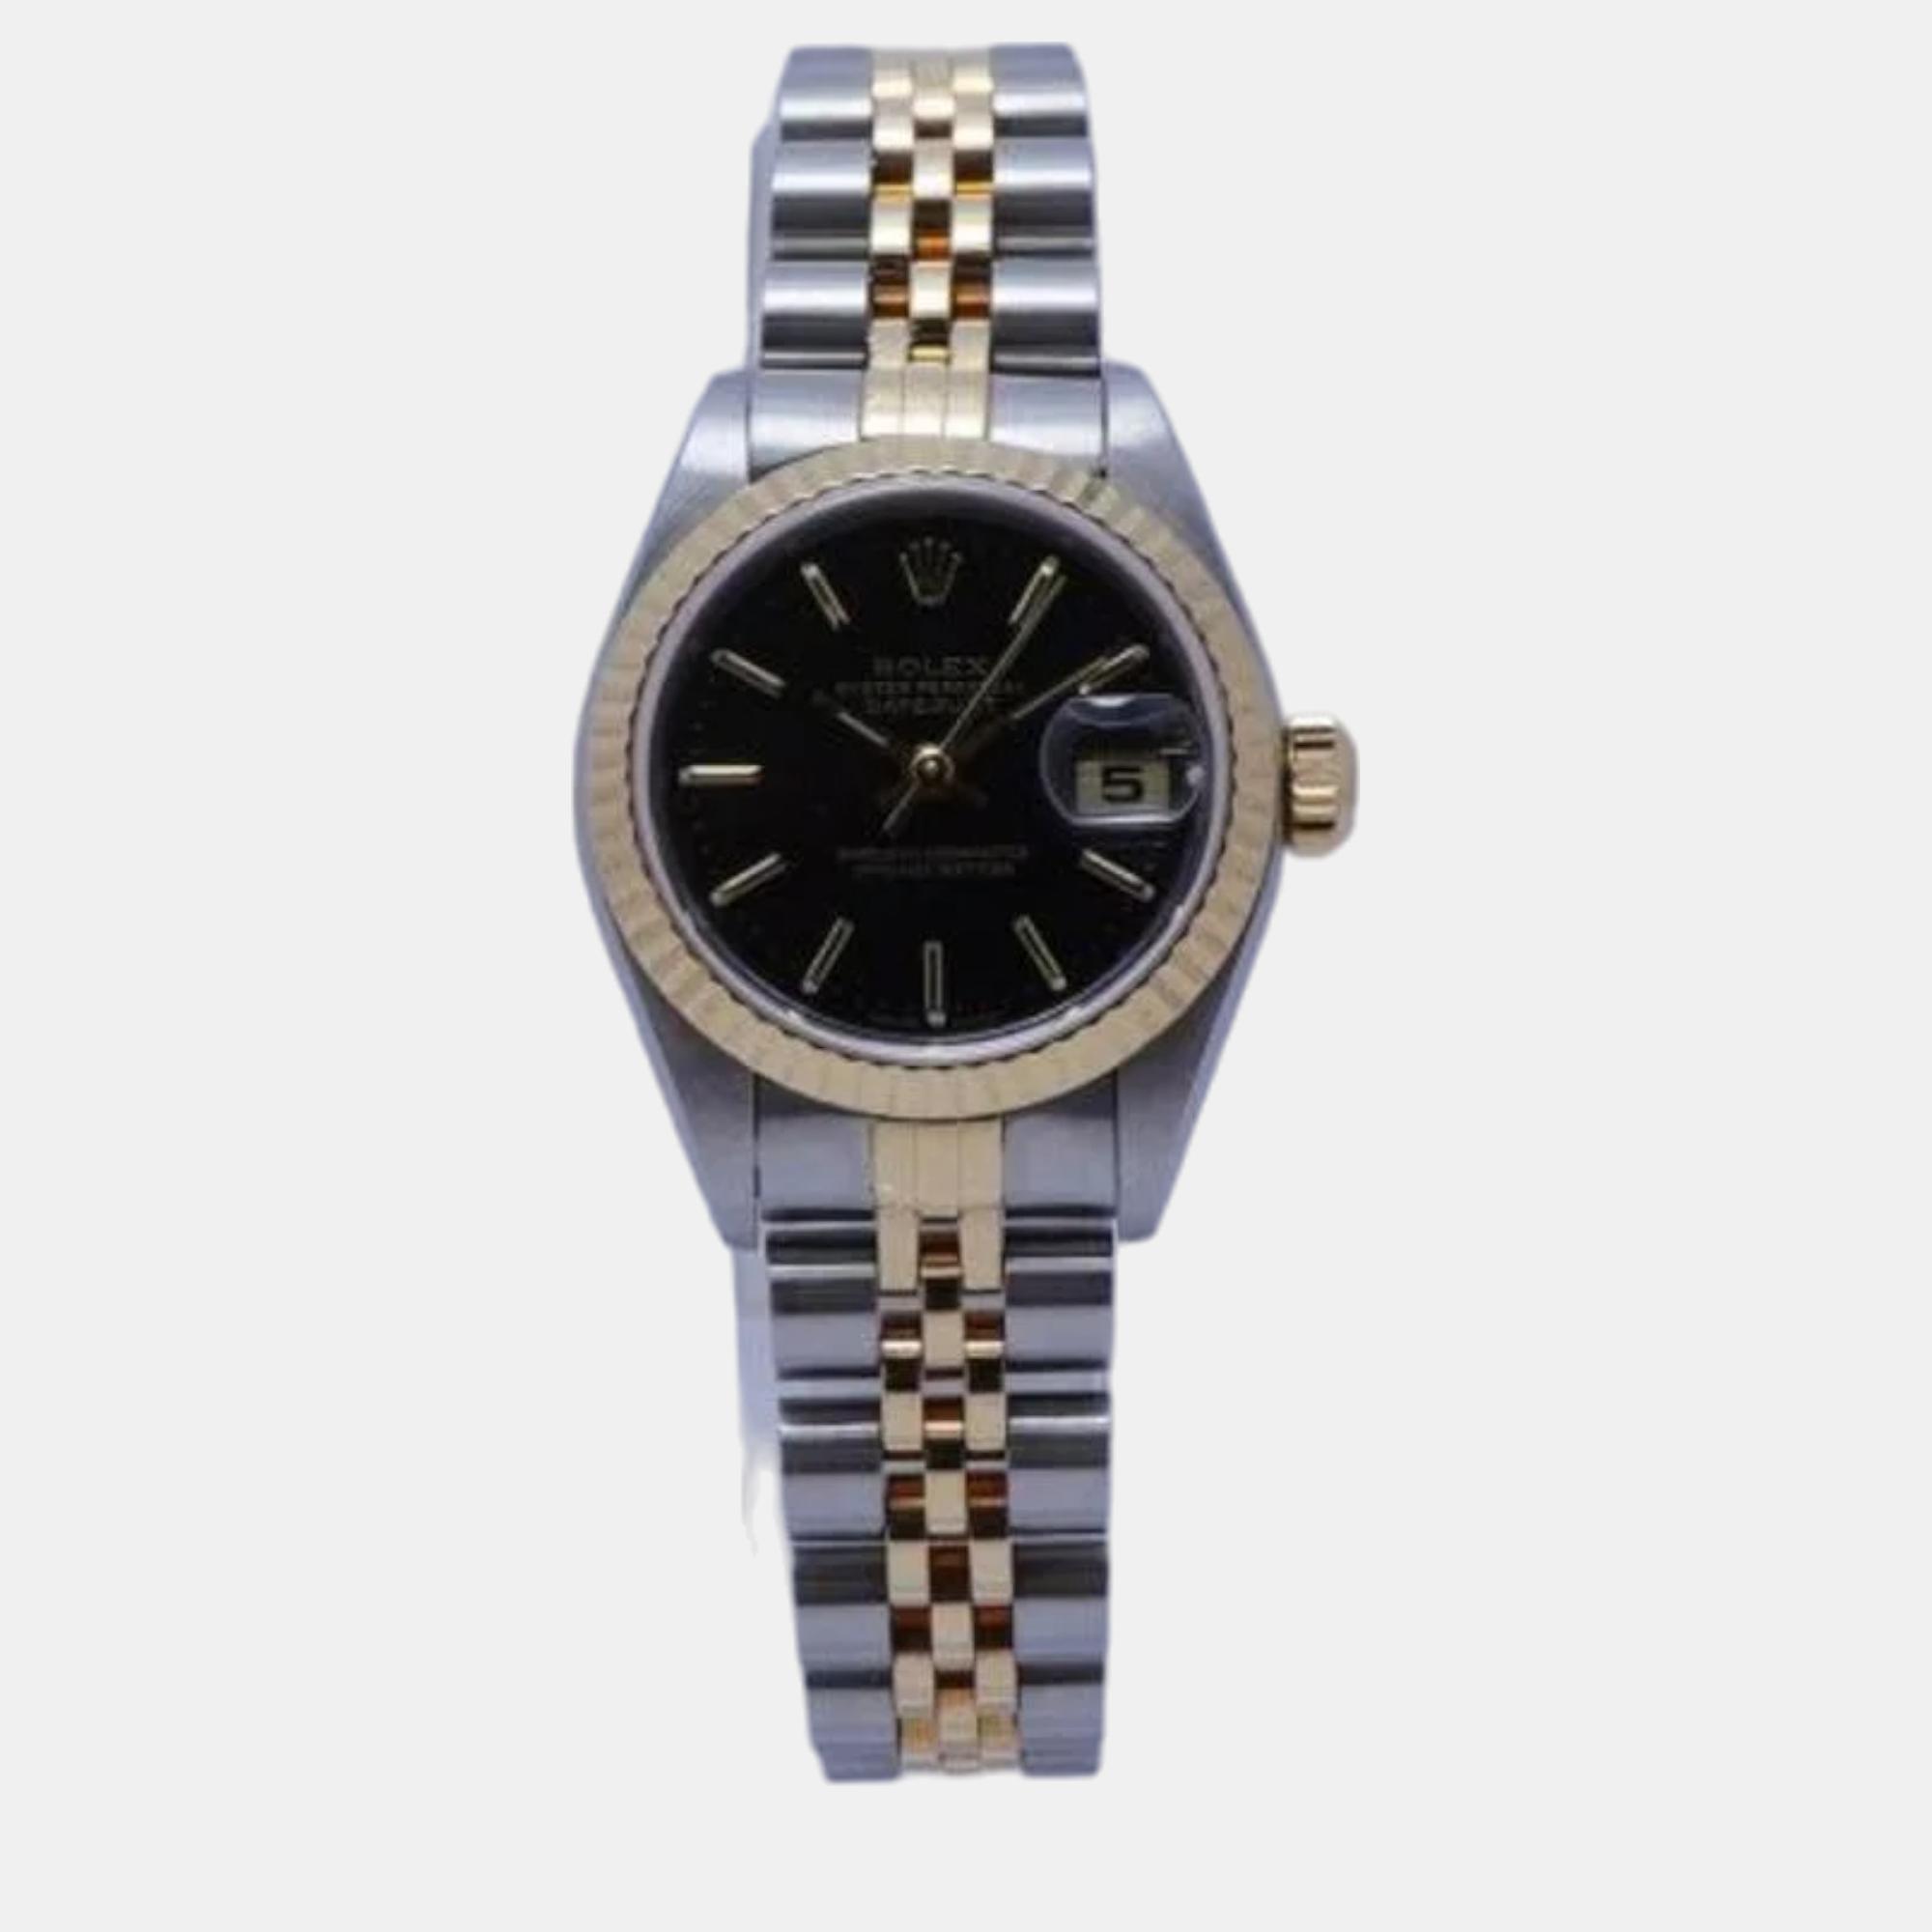 Rolex black 18k yellow gold stainless steel datejust 79173 automatic women's wristwatch 25 mm